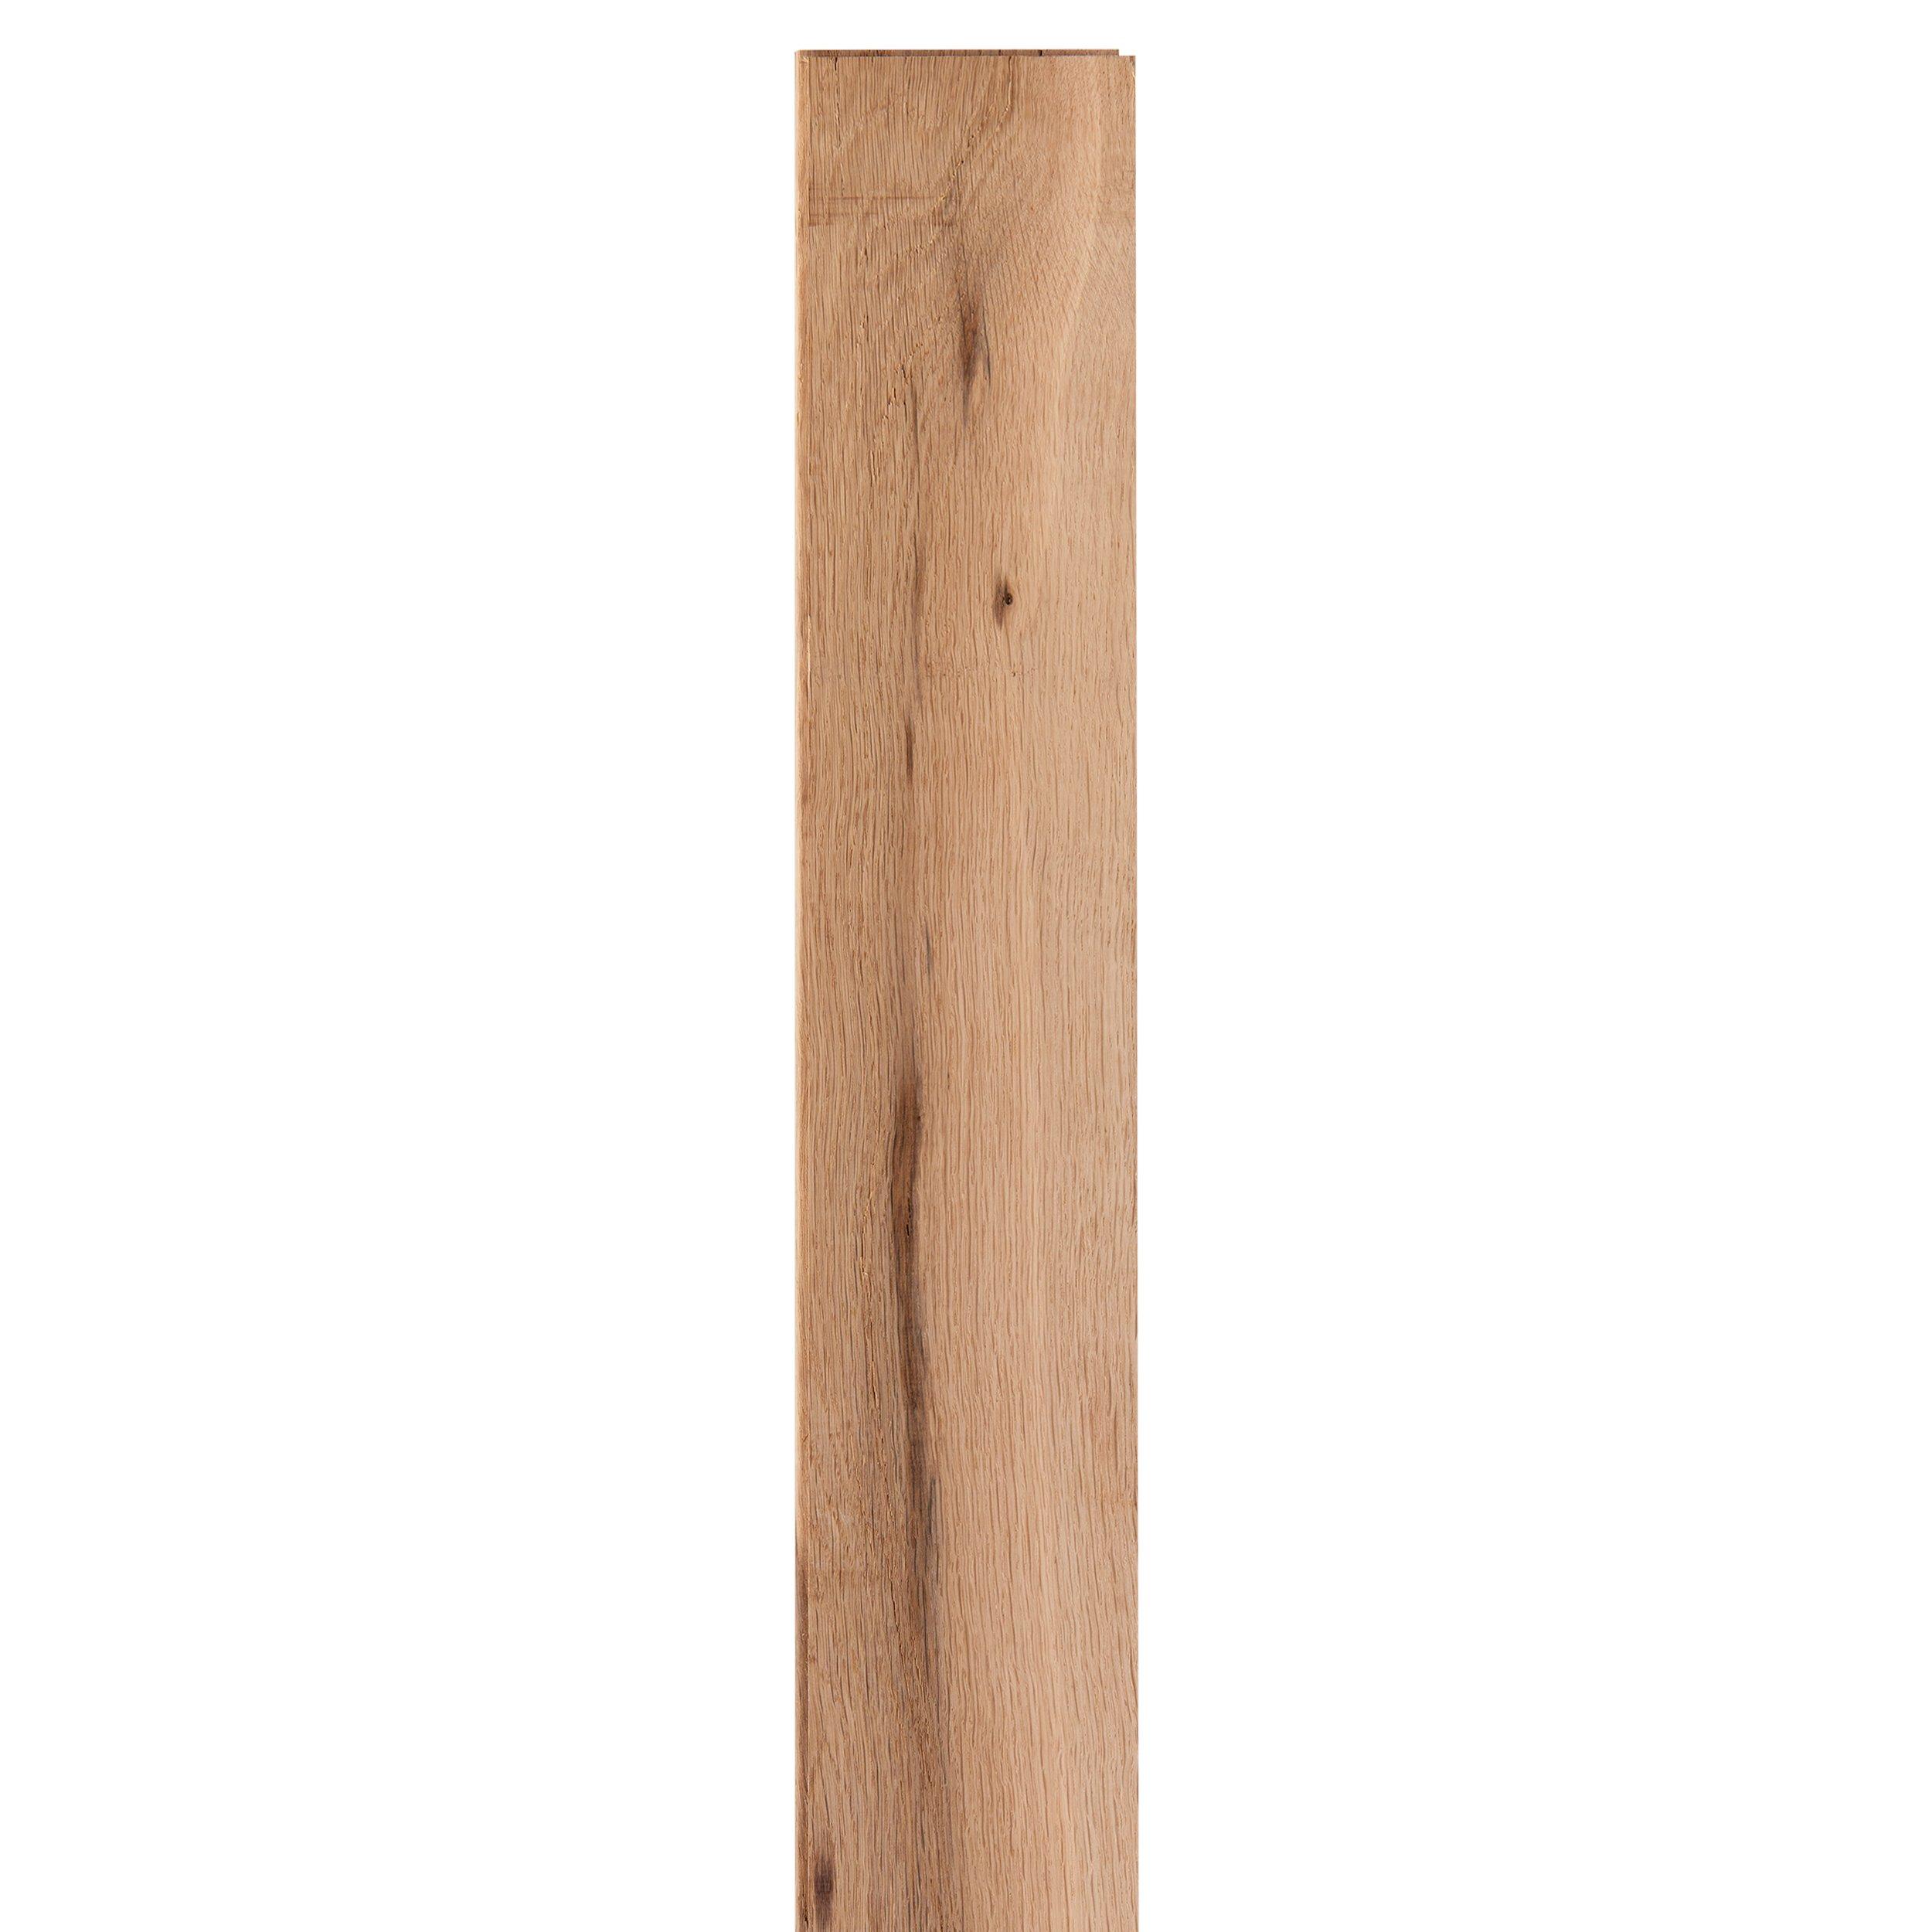 Unfinished White Oak Solid Hardwood 2 Common Grade